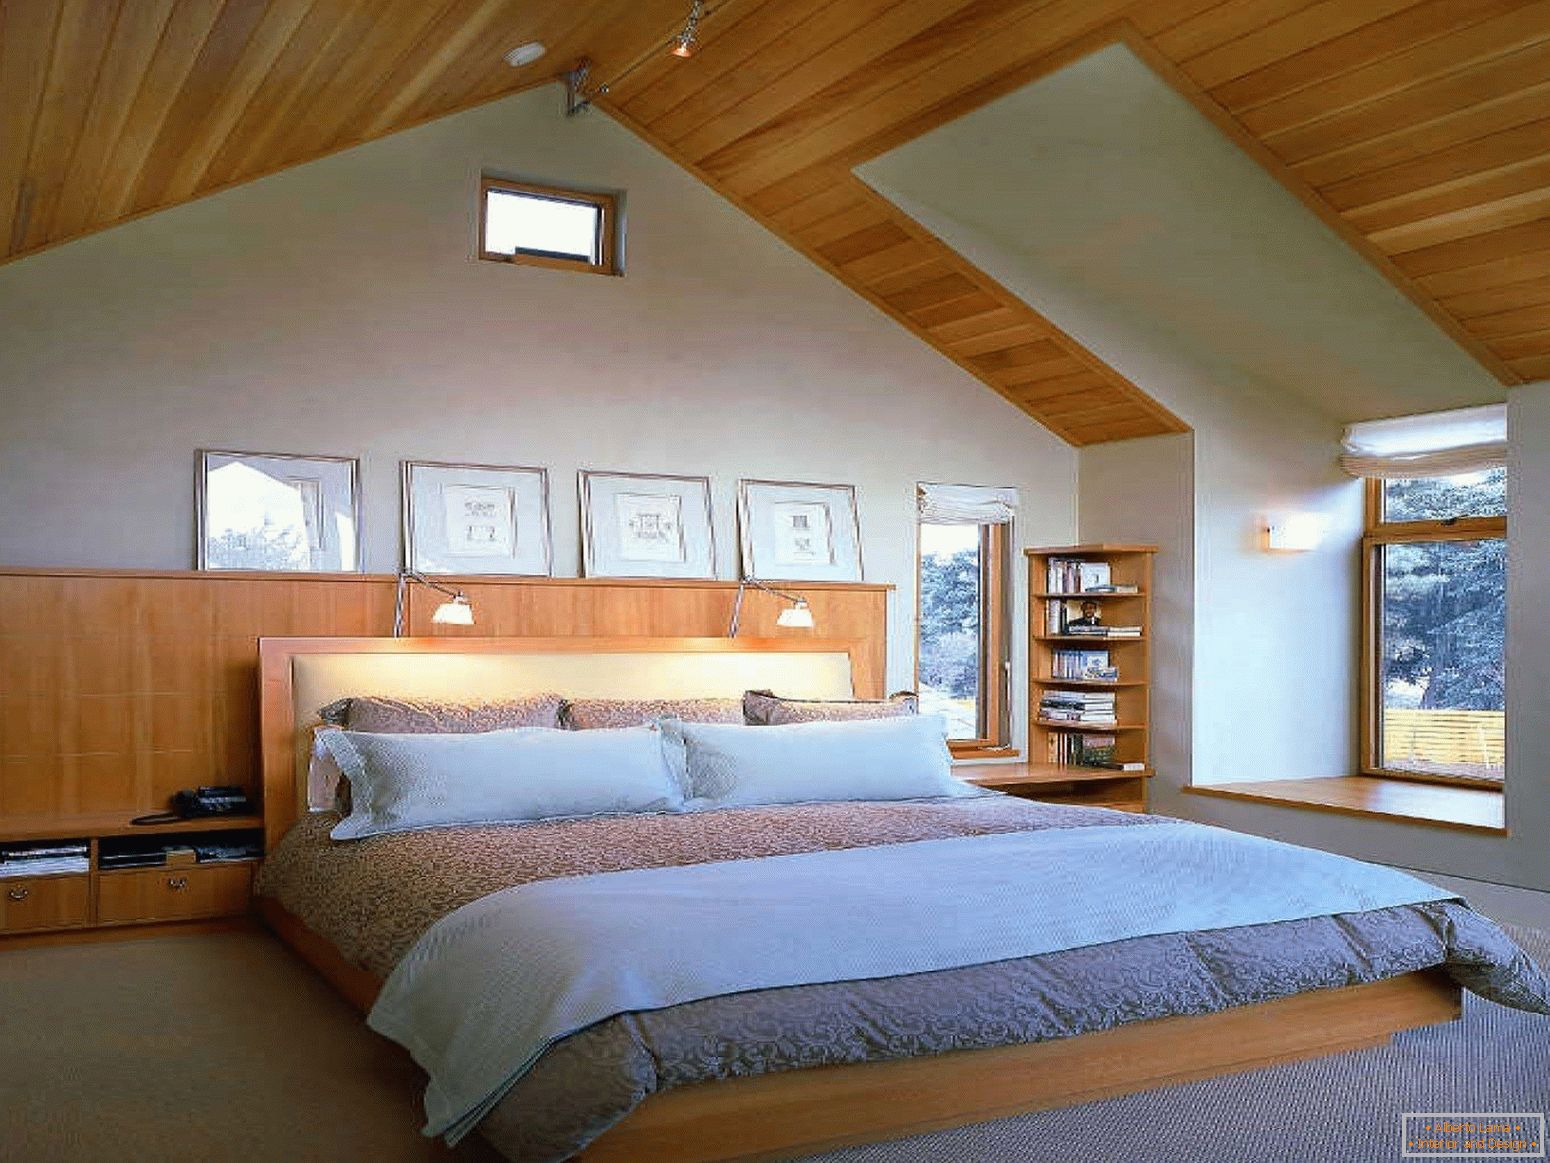 Schlafzimmer Design auf dem Dachboden с высокими стенами